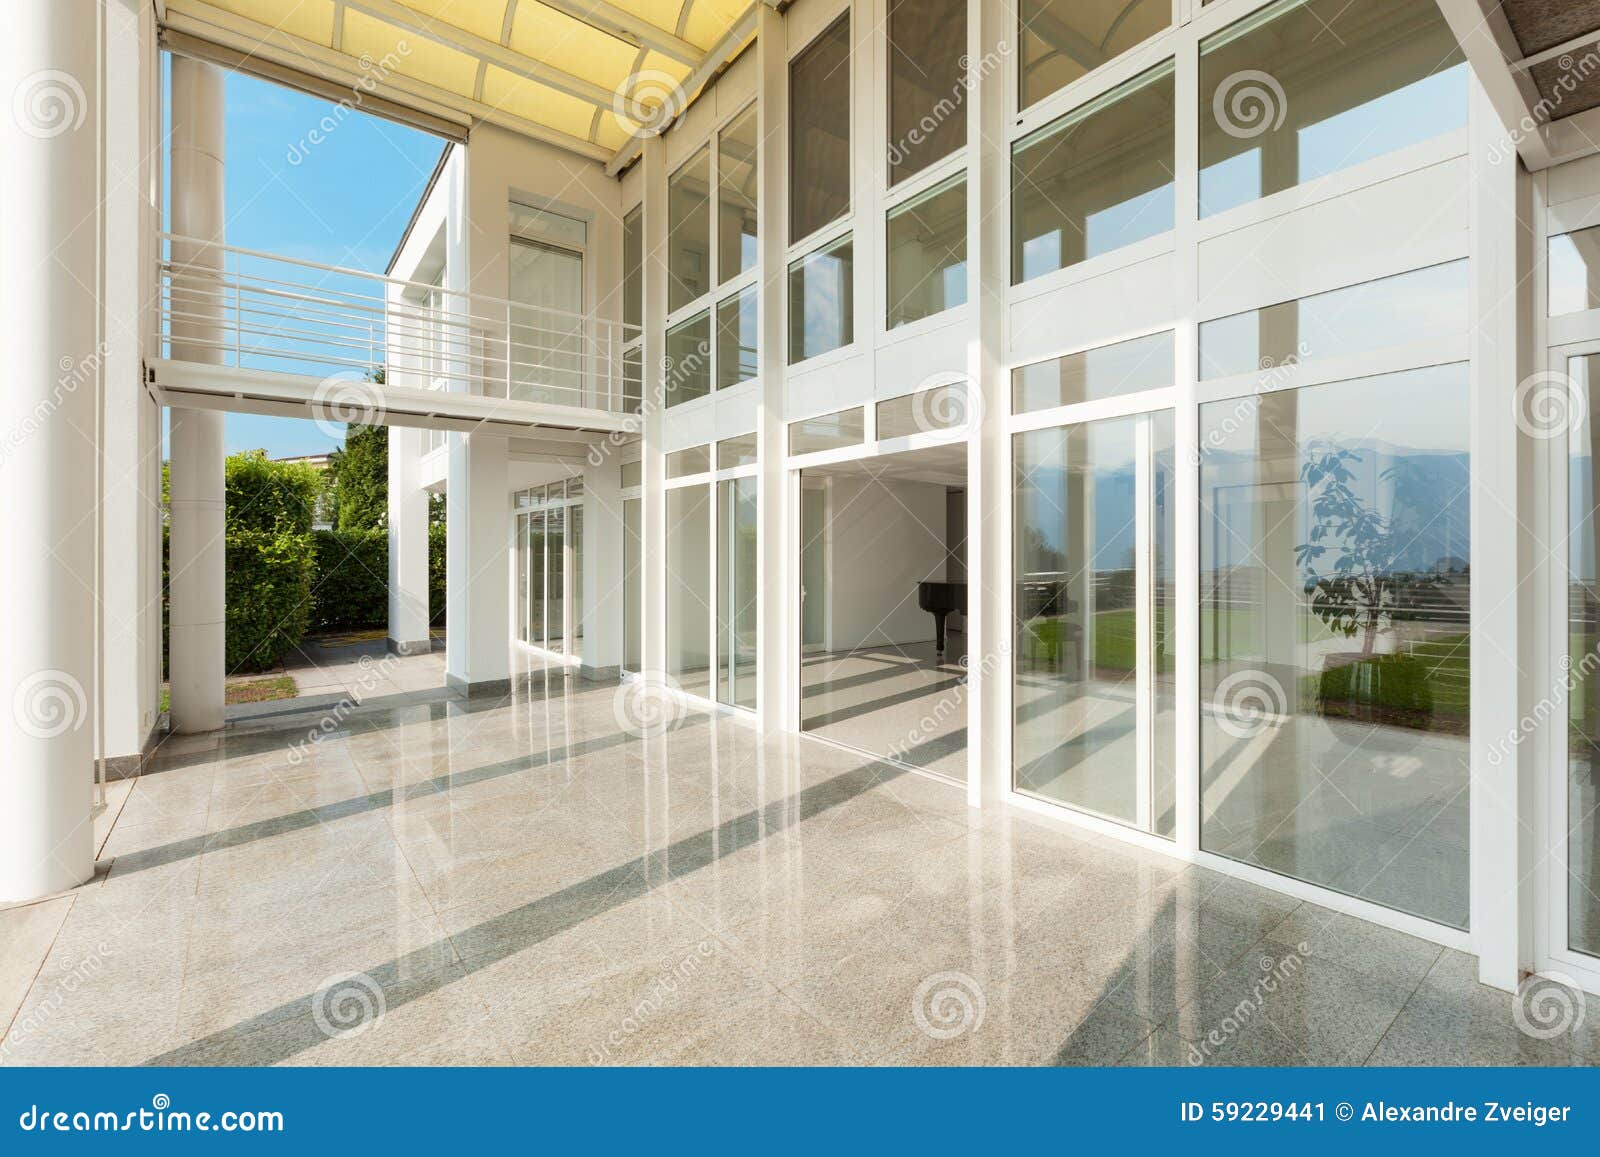 wide veranda of a modern house